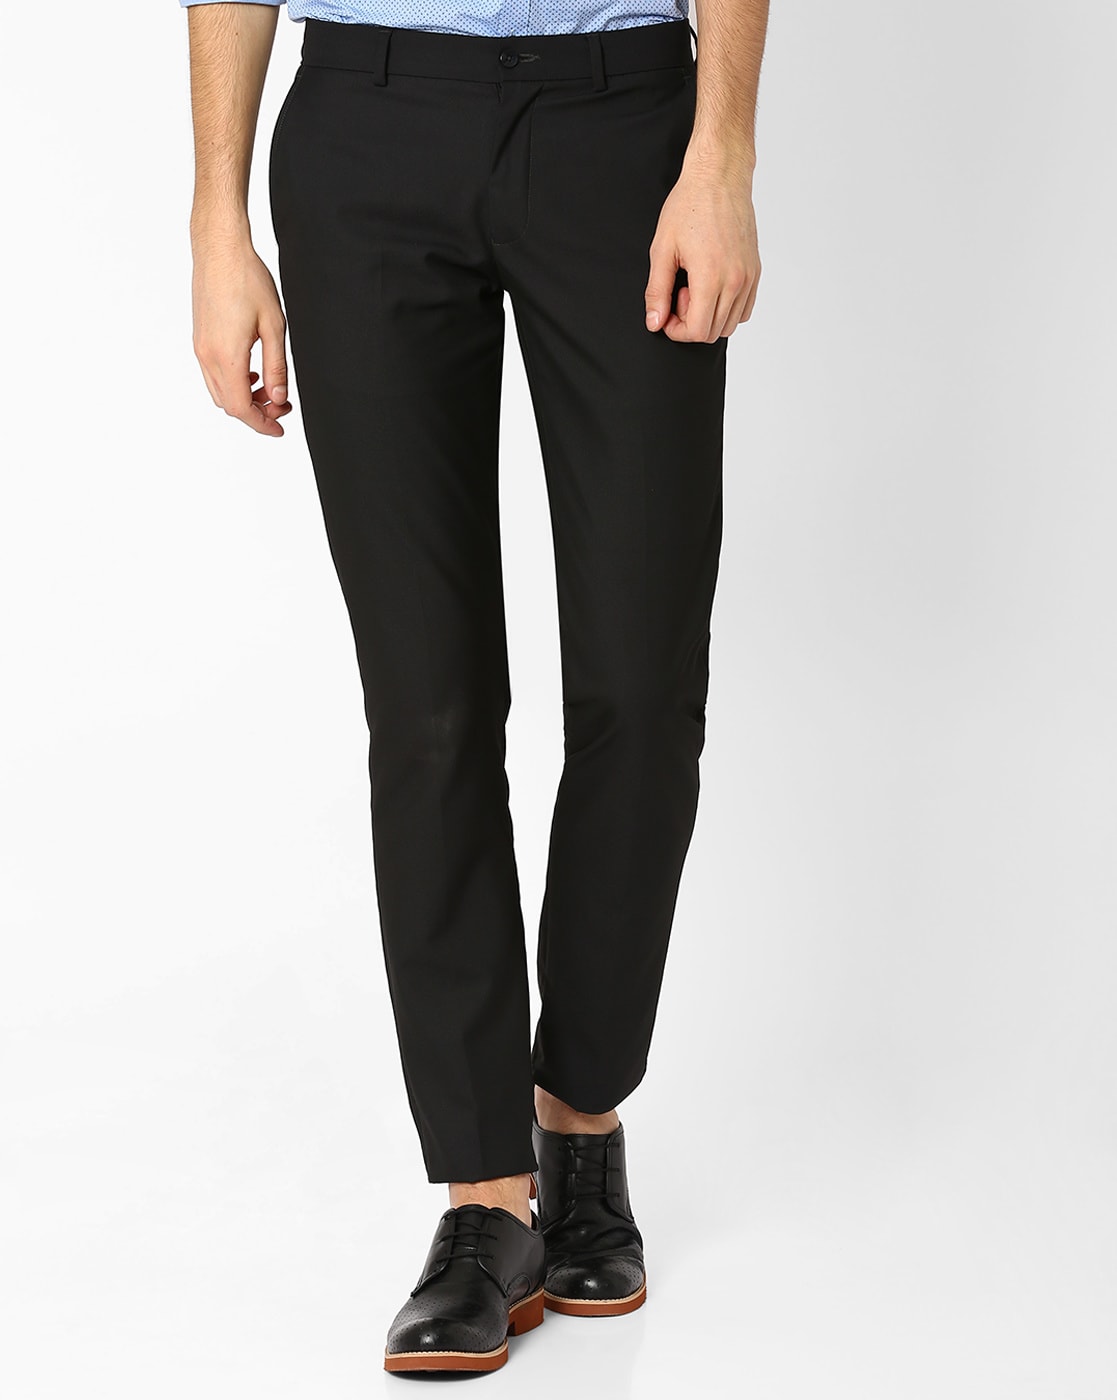 Buy Men Black Solid Slim Fit Formal Trousers Online - 698228 | Peter England-hkpdtq2012.edu.vn